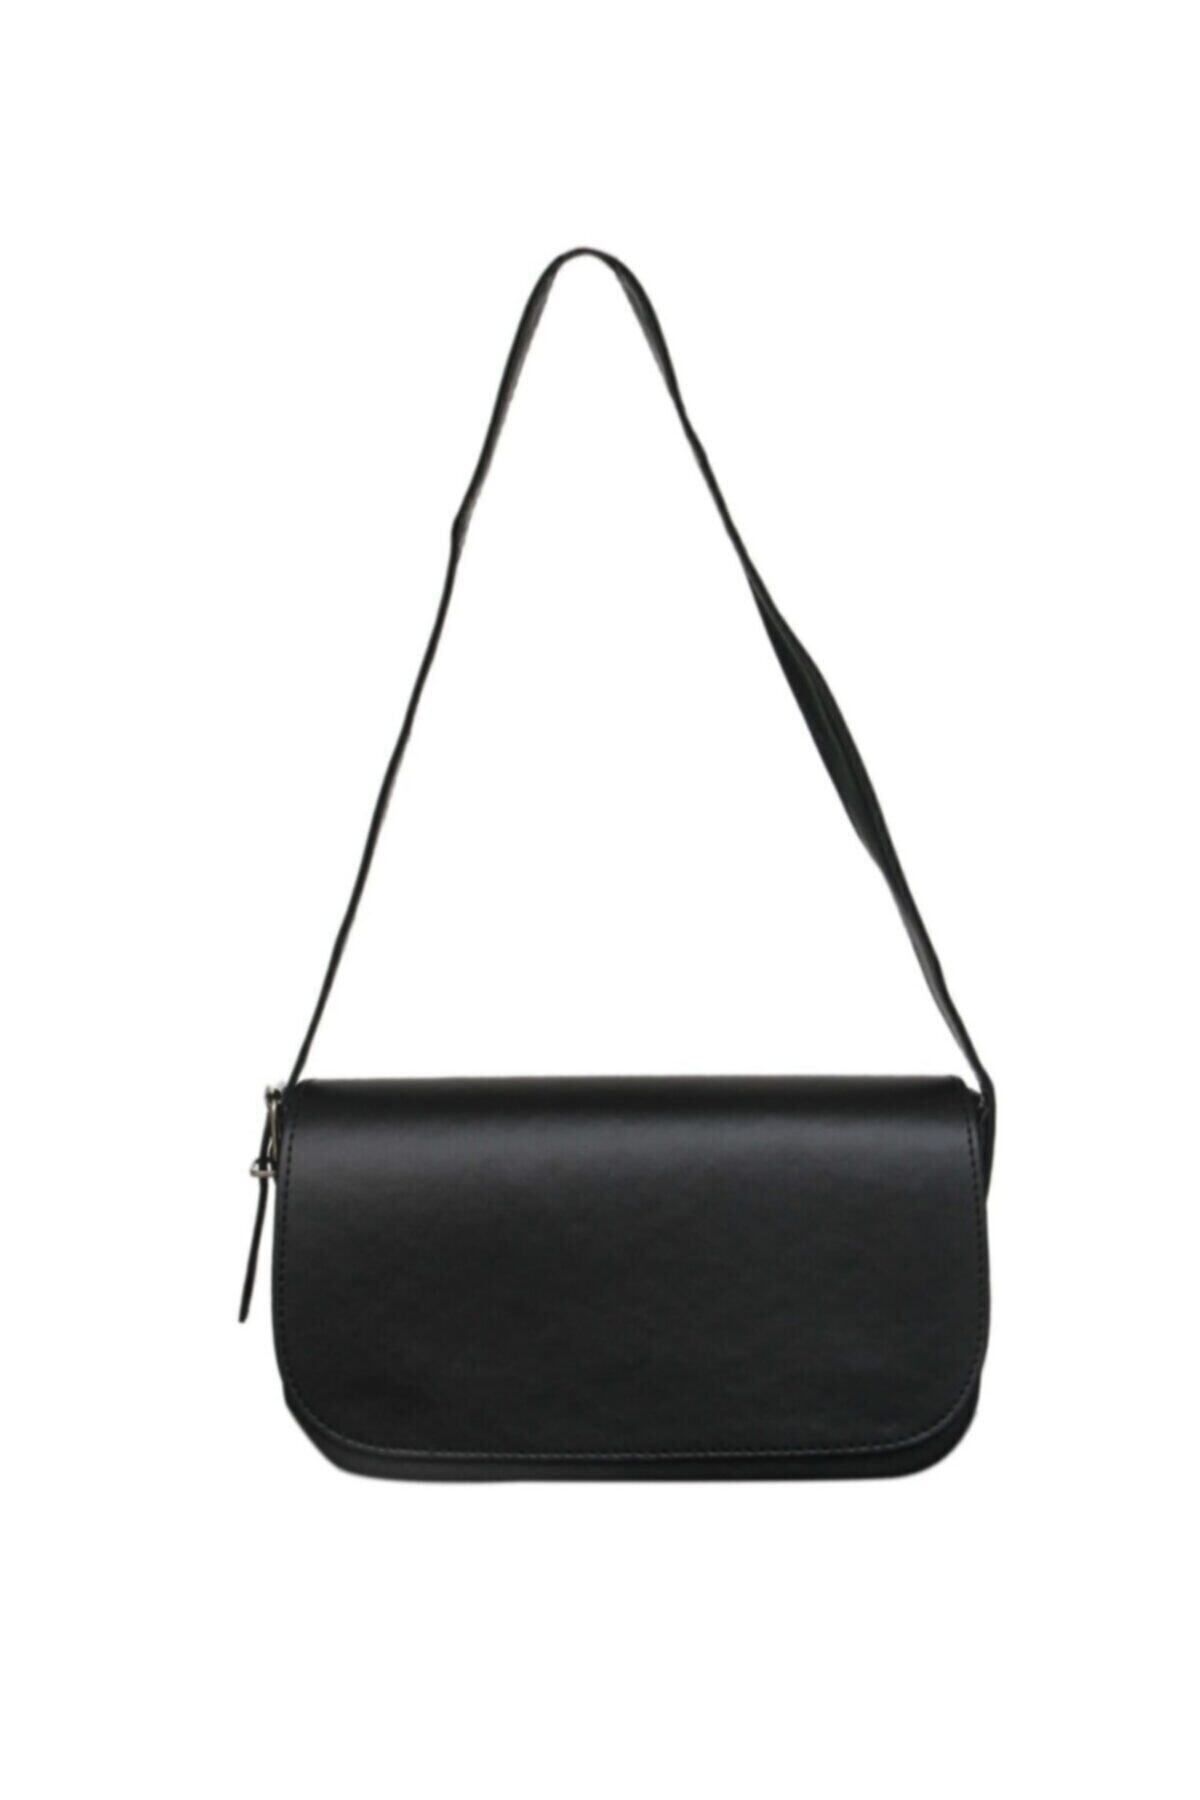 bag&more Çantabest Kadın Siyah Kapaklı Baget Çanta Vicky Modeli